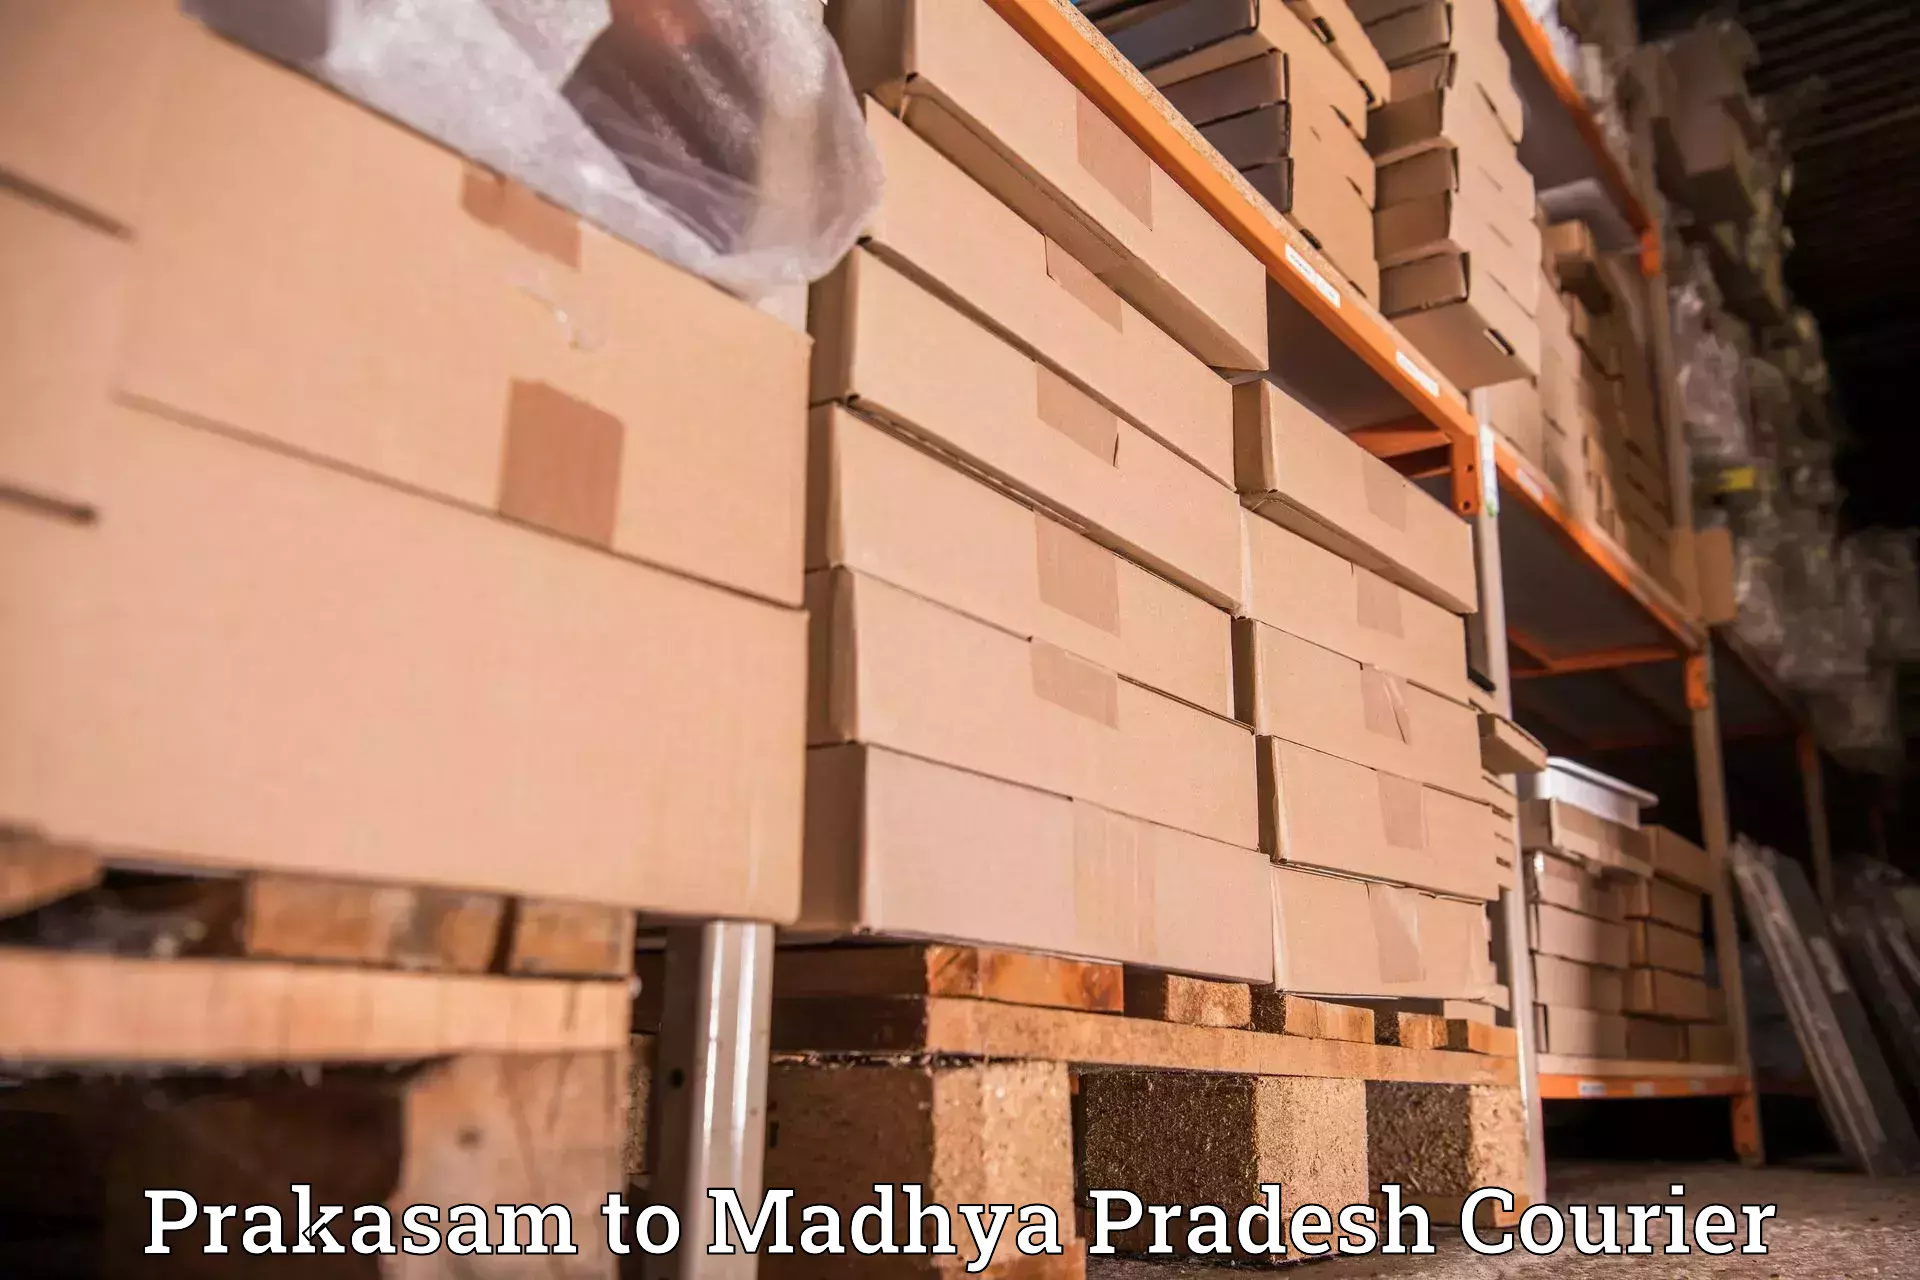 Courier service comparison Prakasam to Seoni Malwa